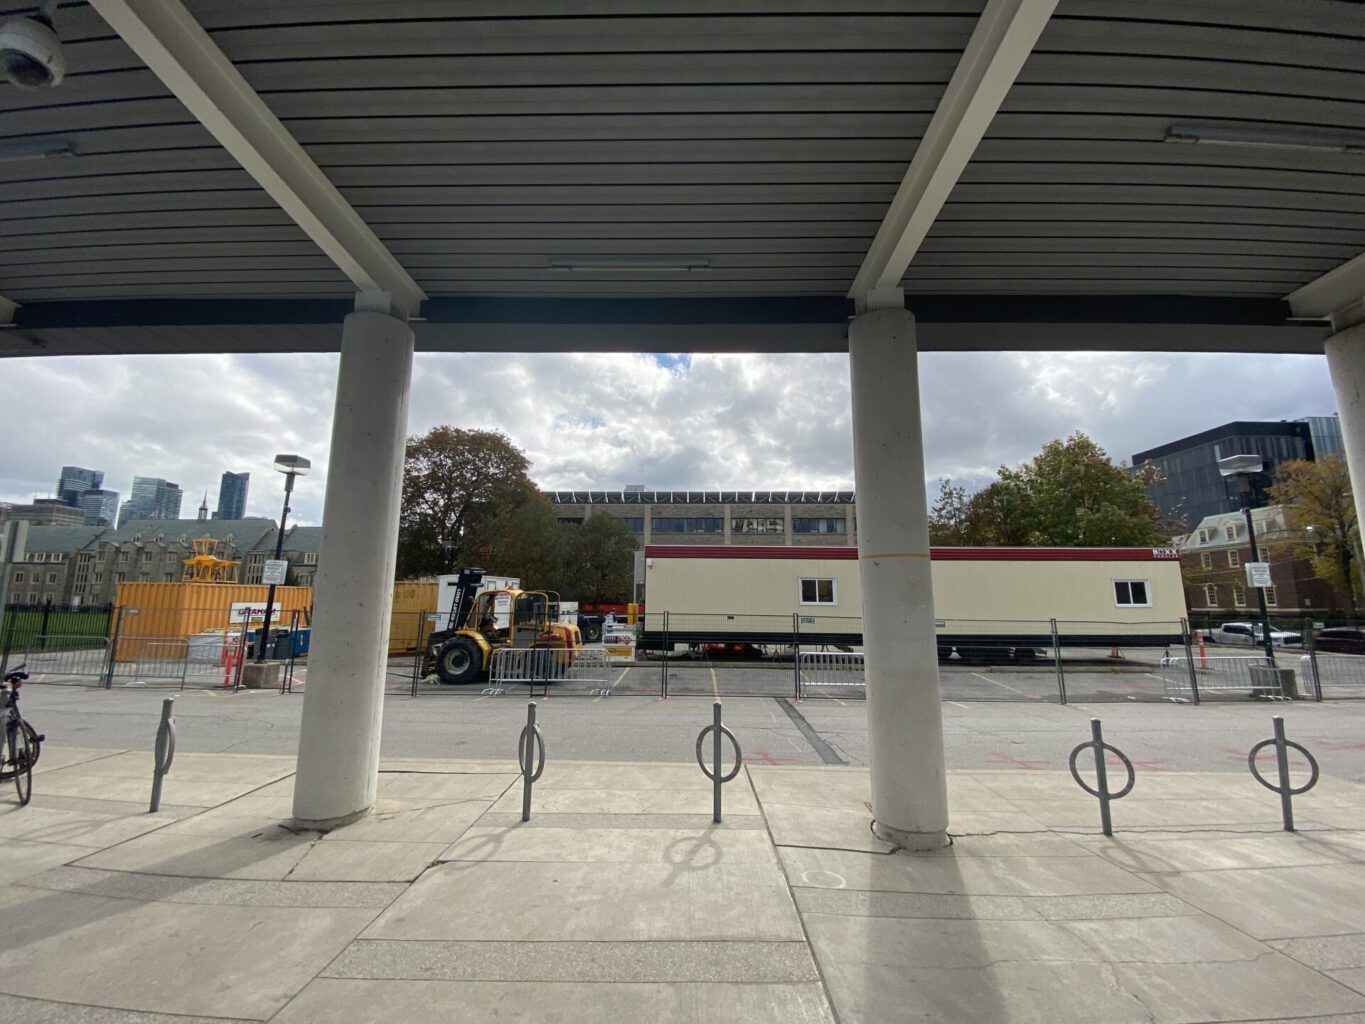 Construction site: Former surface parking lot, October 18, 2022